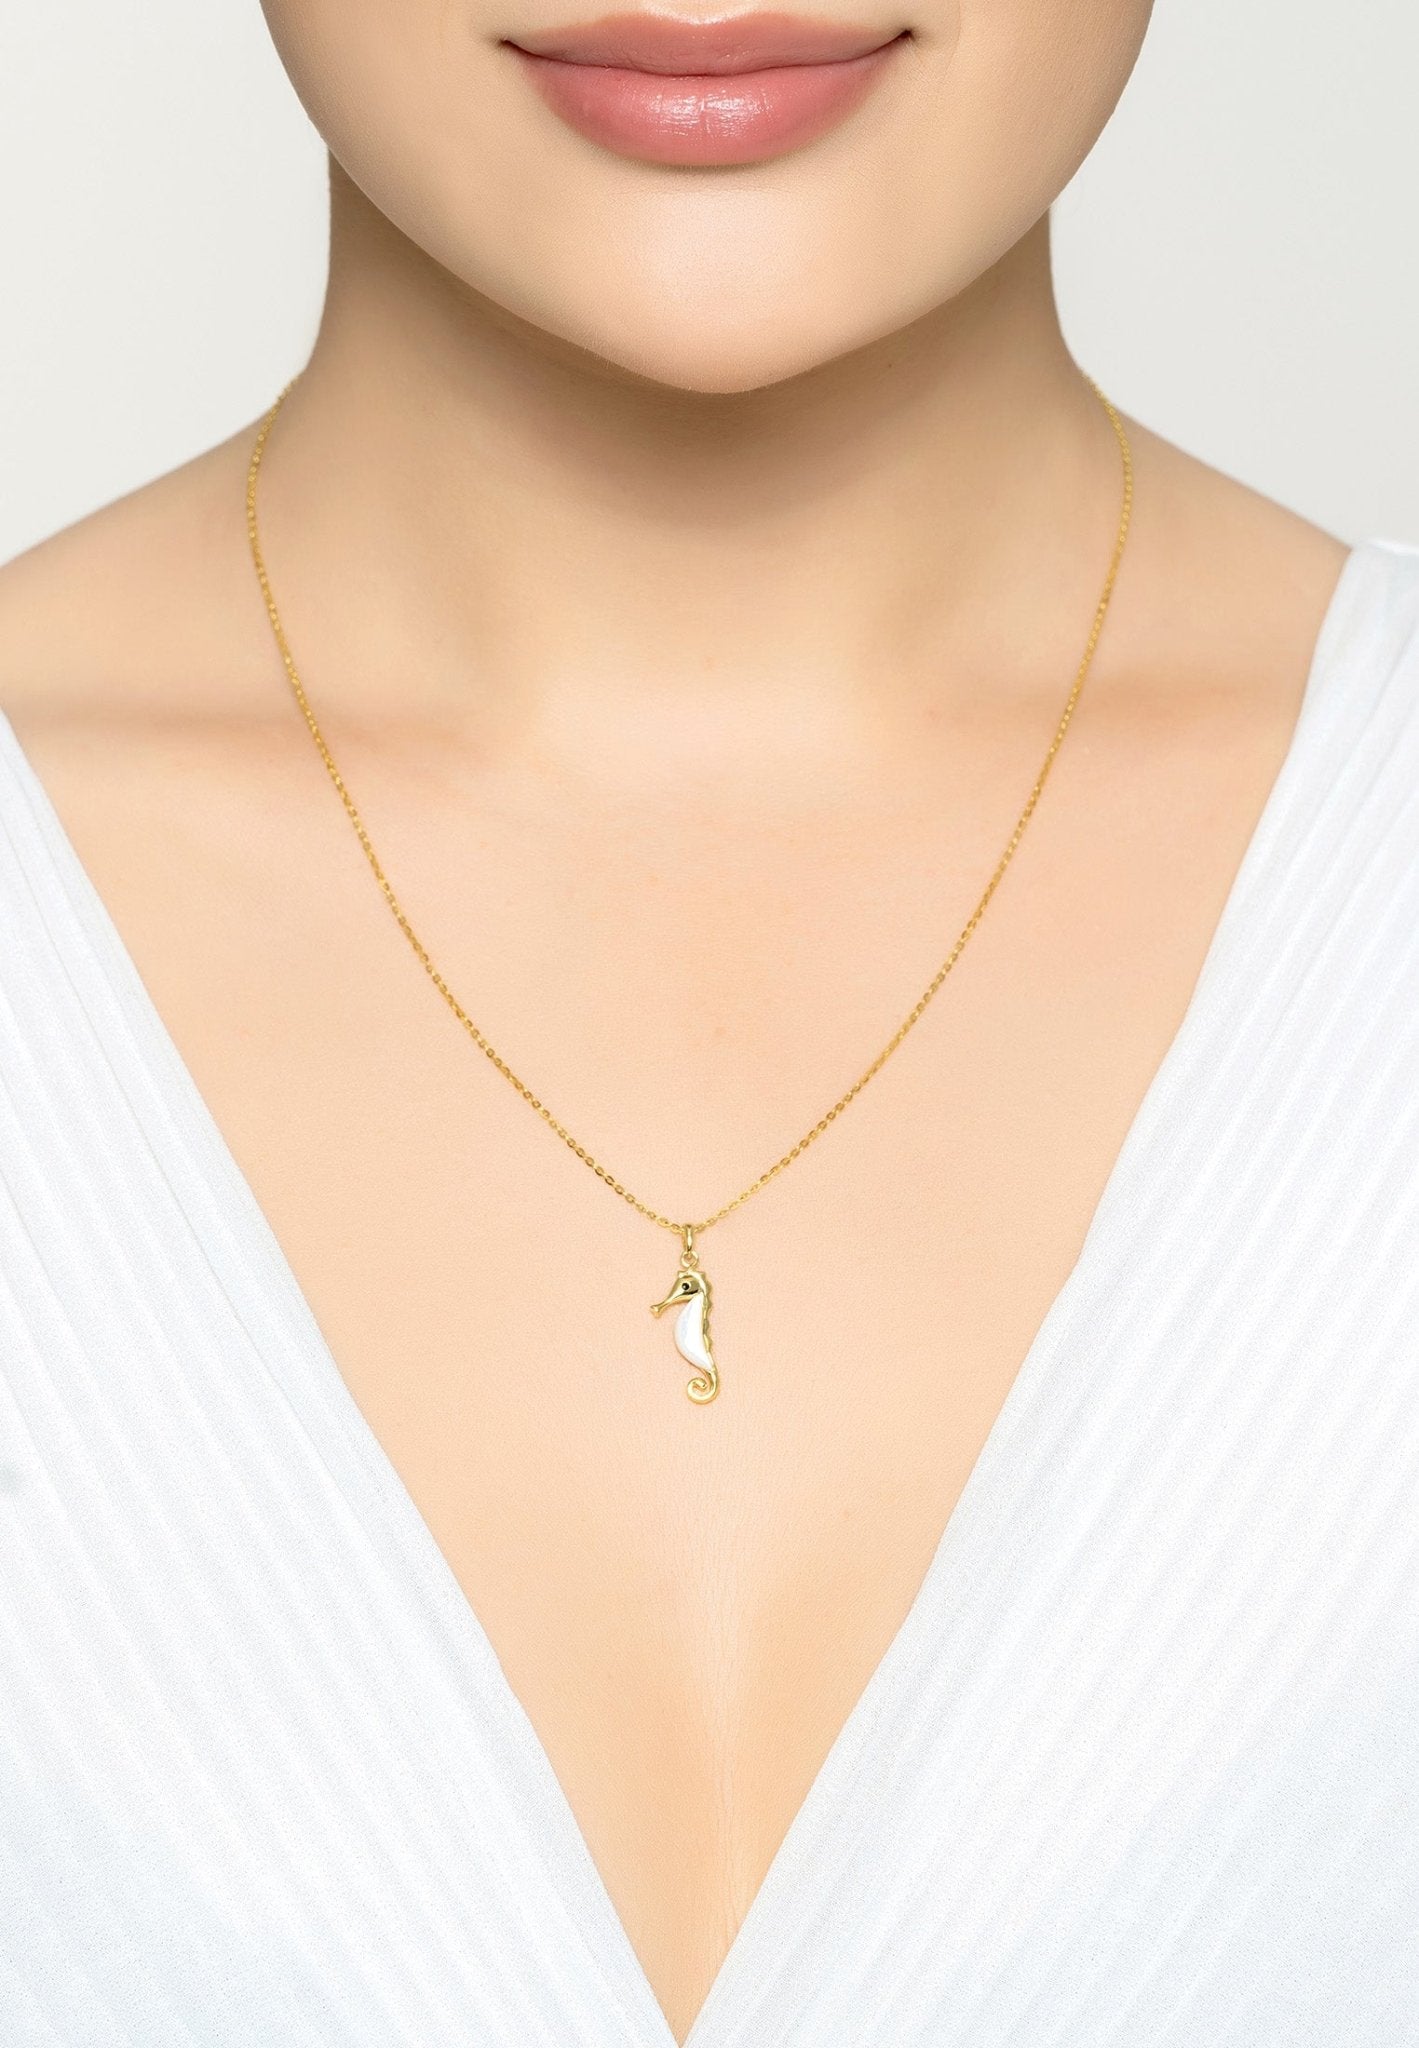 Seahorse Pearl Necklace Gold - Playful Elegance, Timeless Symbolism - Desire & Hope